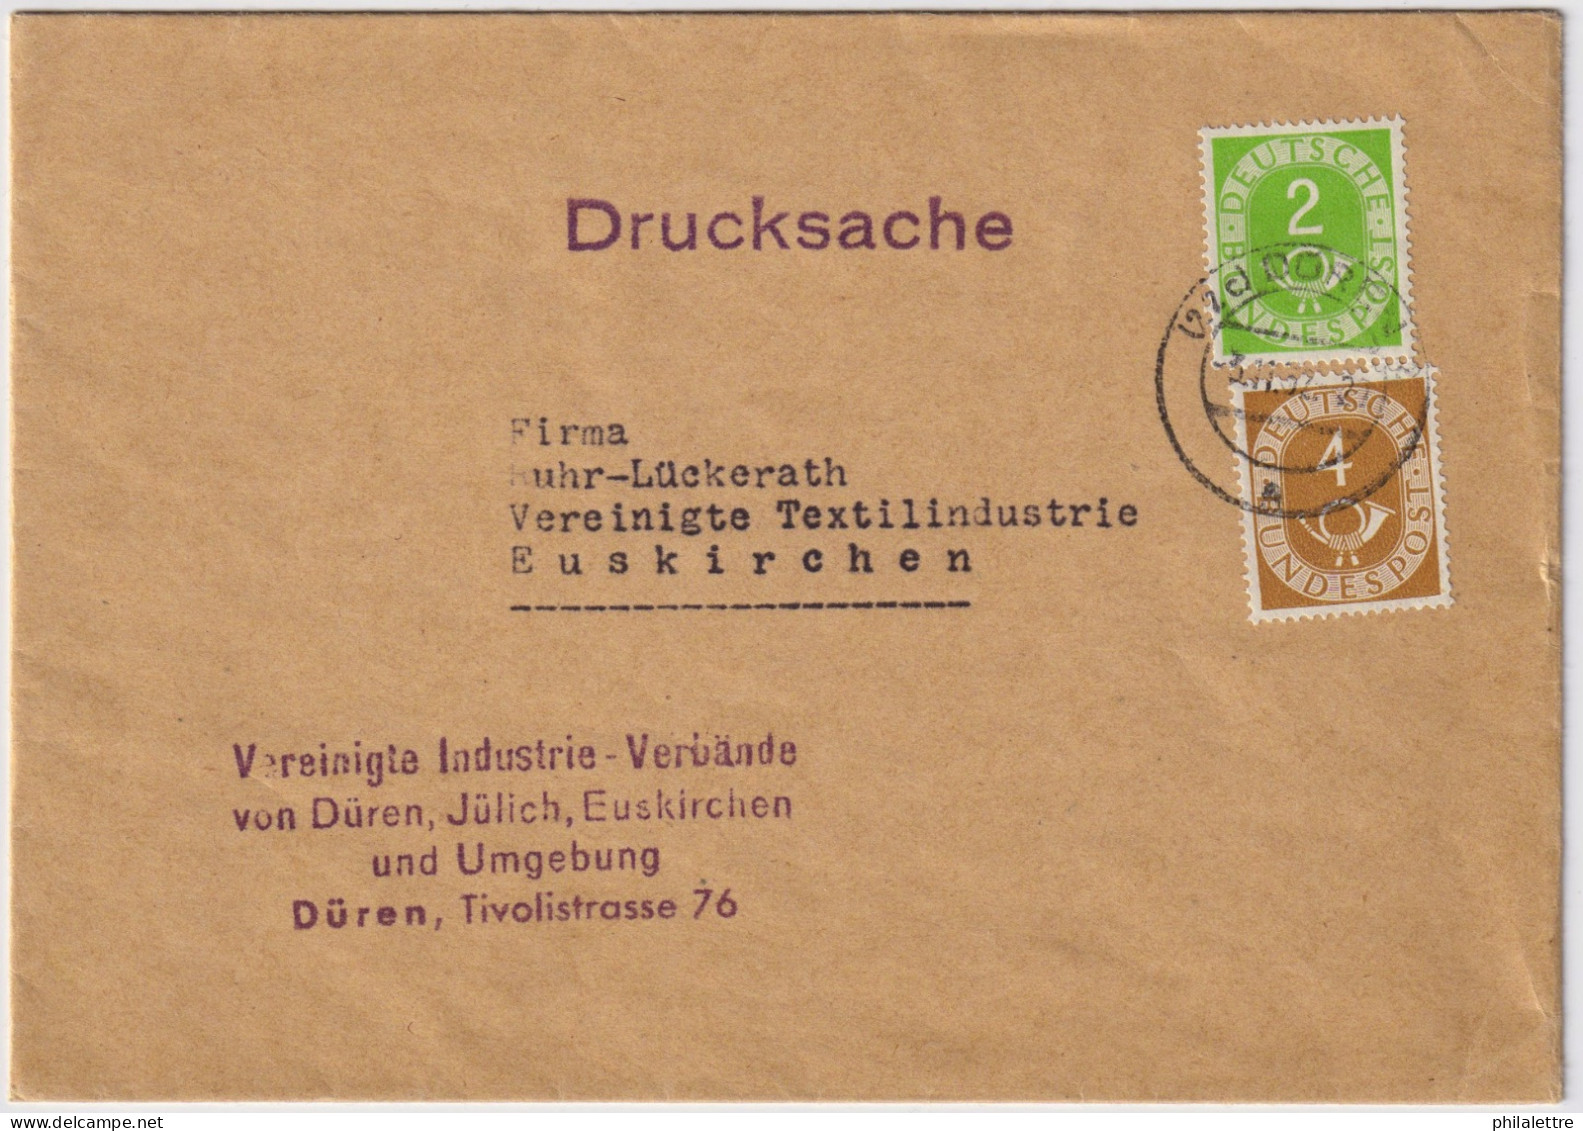 ALLEMAGNE / GERMANY - 1953 - Mi.123 & Mi.124 2pf. & 4pf. On Printed Matters (Drucksache) Cover From Düren To Euskirchen - Briefe U. Dokumente